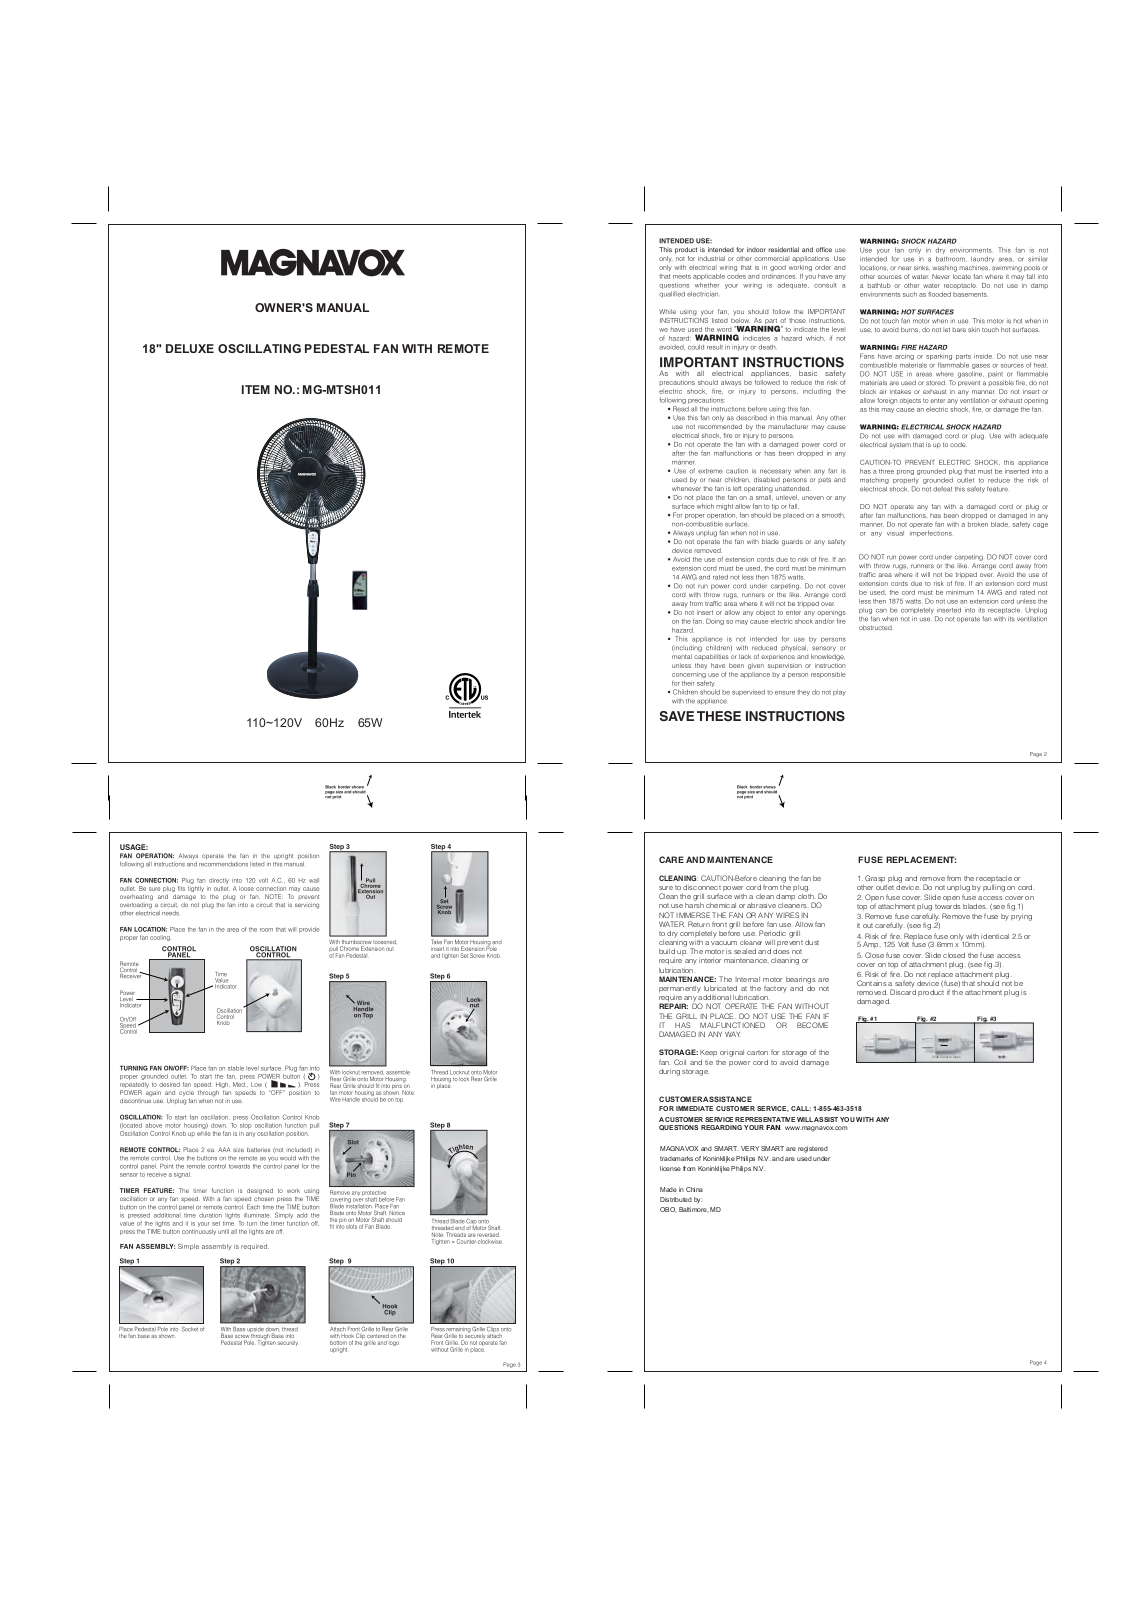 Magnavox MG-MTSH011 User Manual